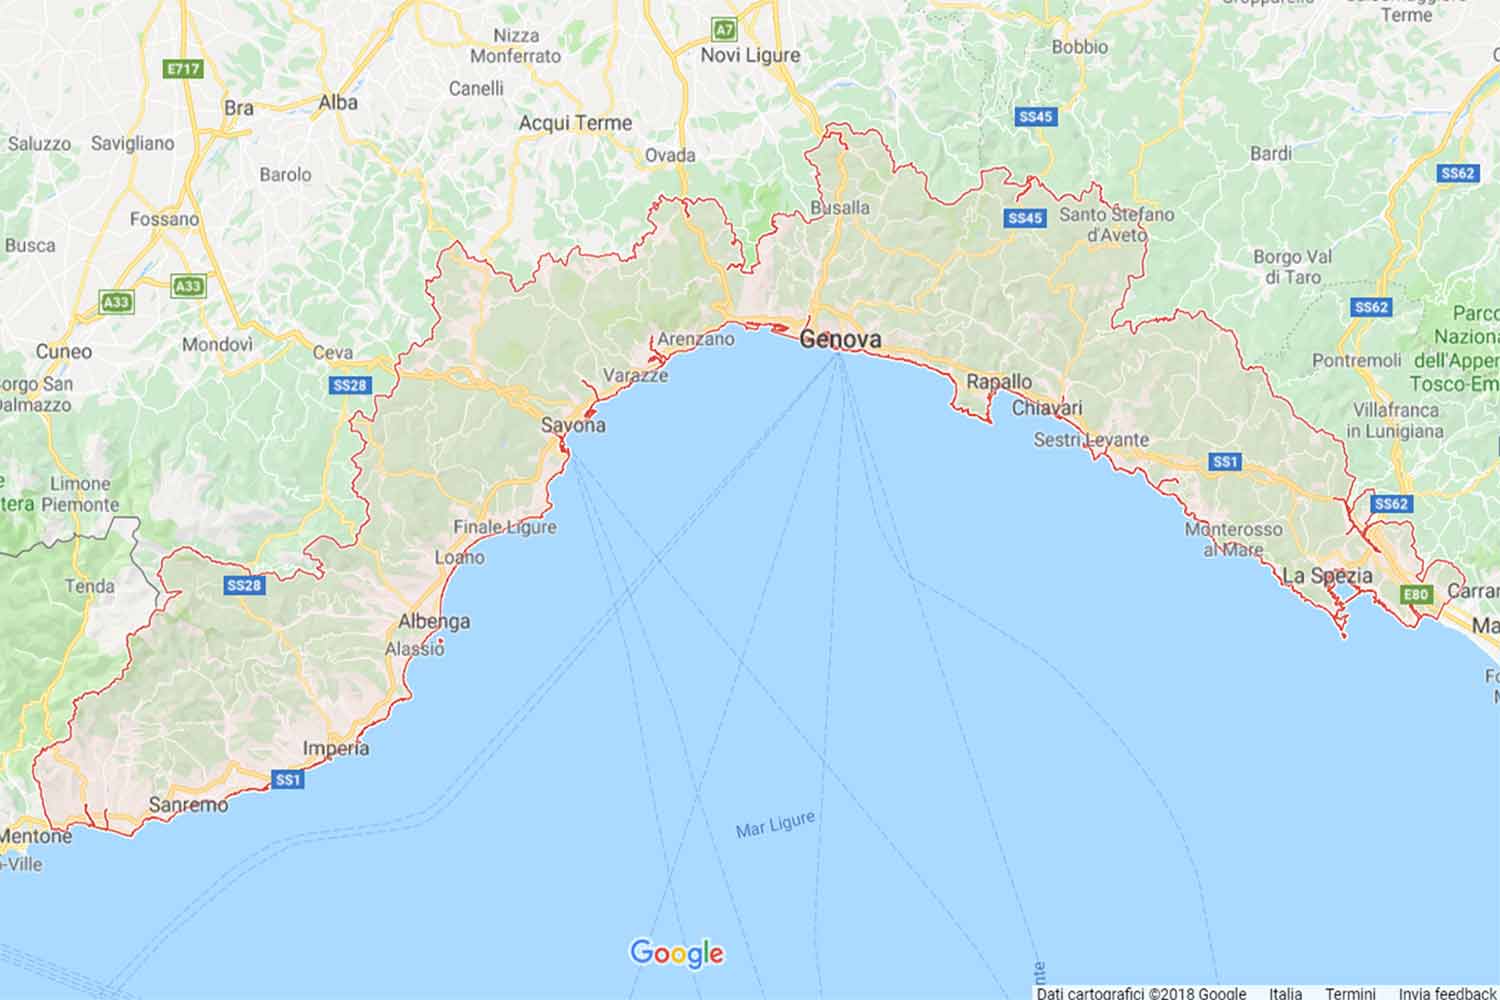 Liguria - Imperia - Vallebona Preventivi Veloci google maps